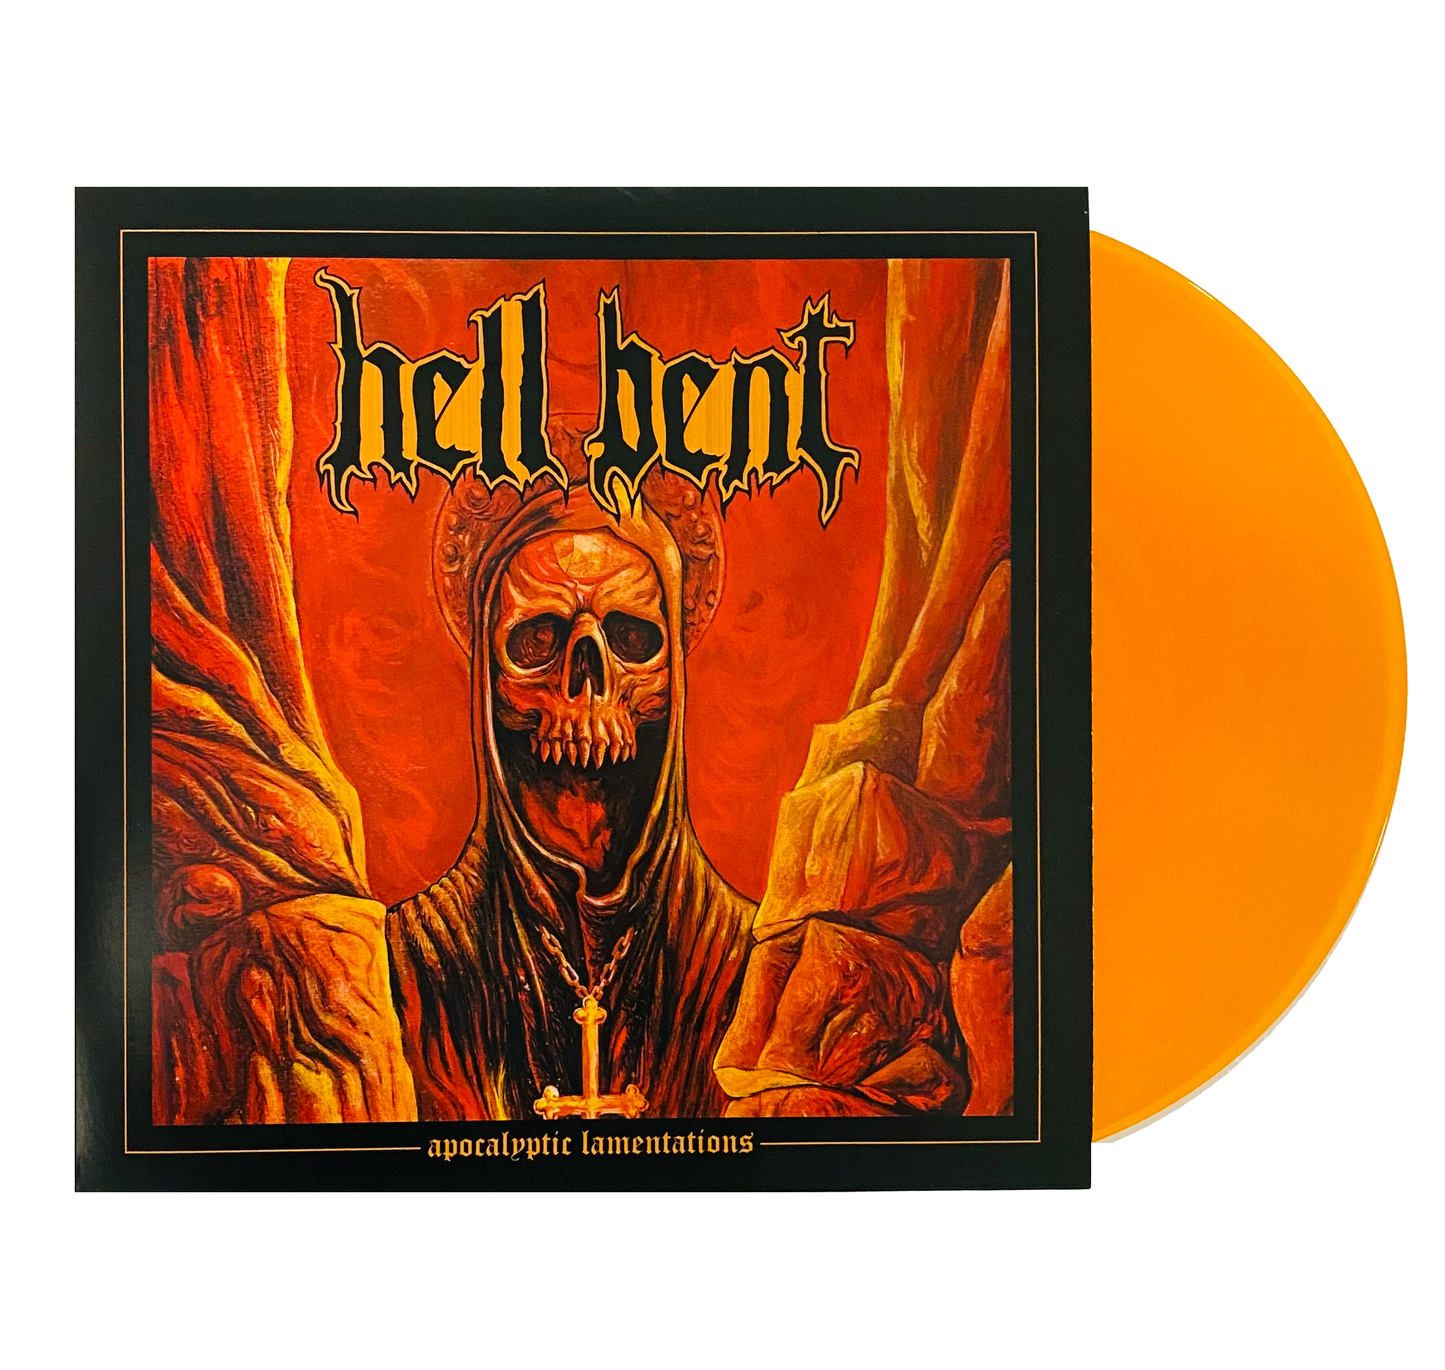 Hell Bent - Apocalyptic Lamentations LP